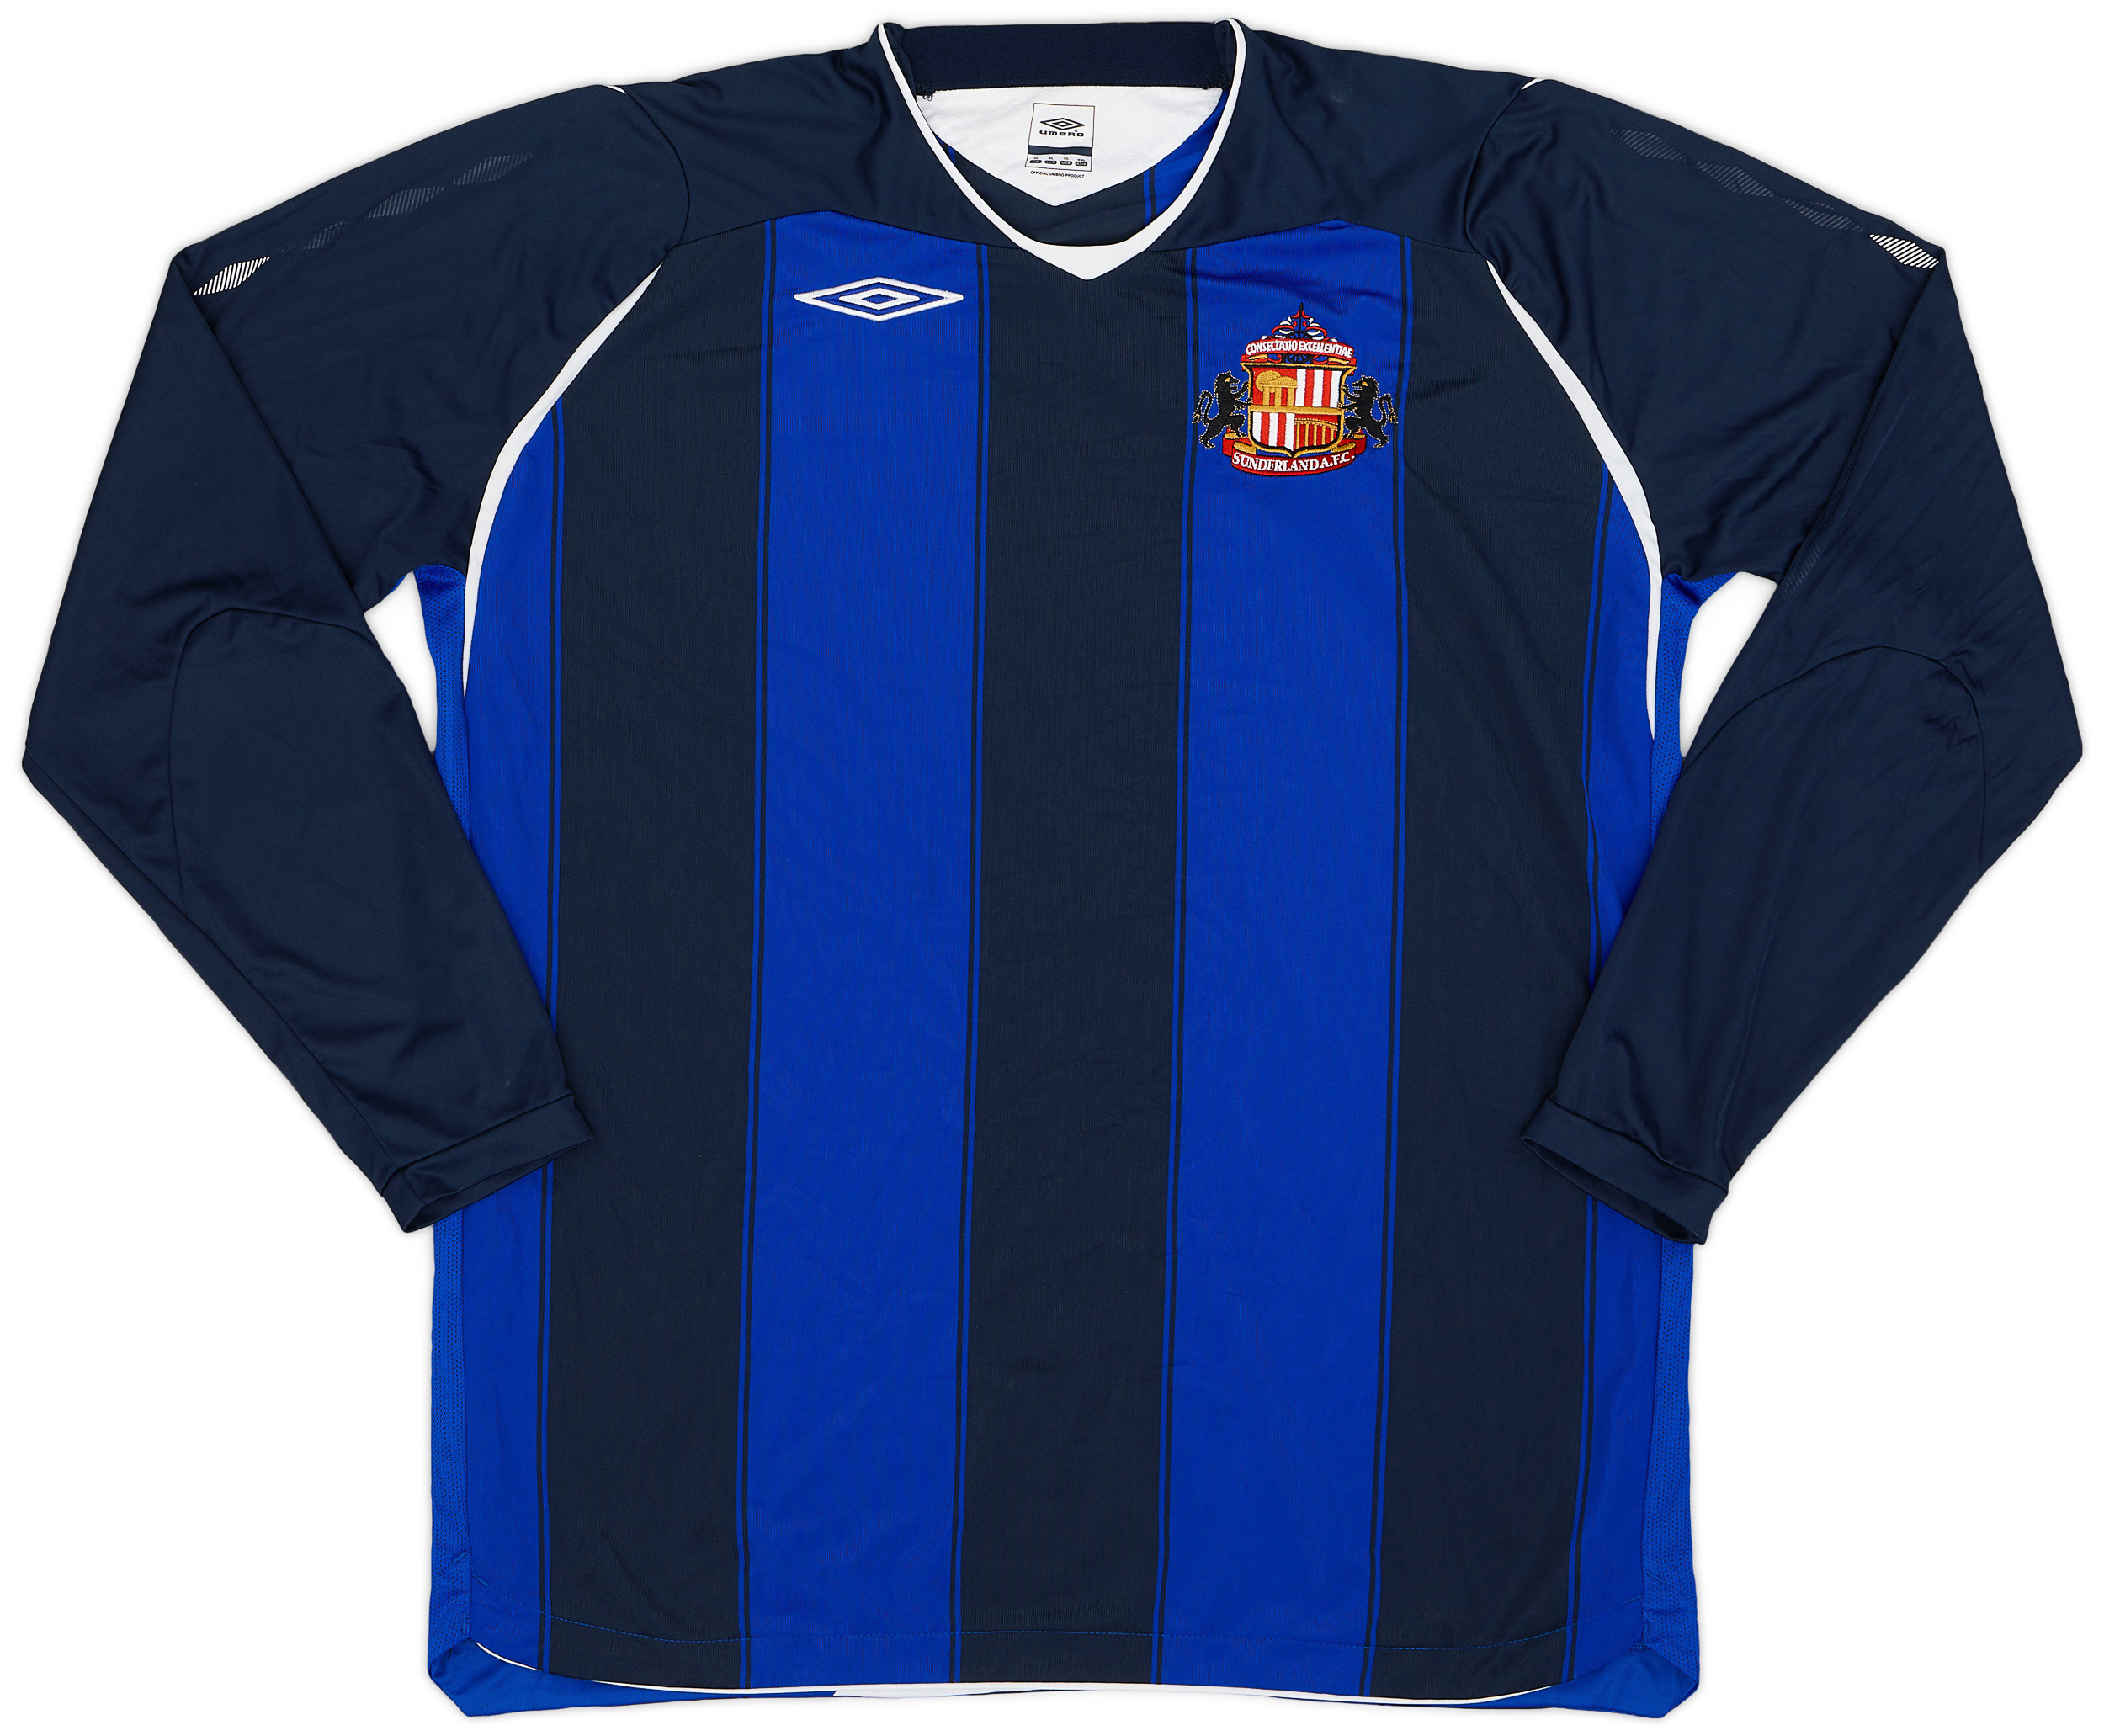 Sunderland  Fora camisa (Original)